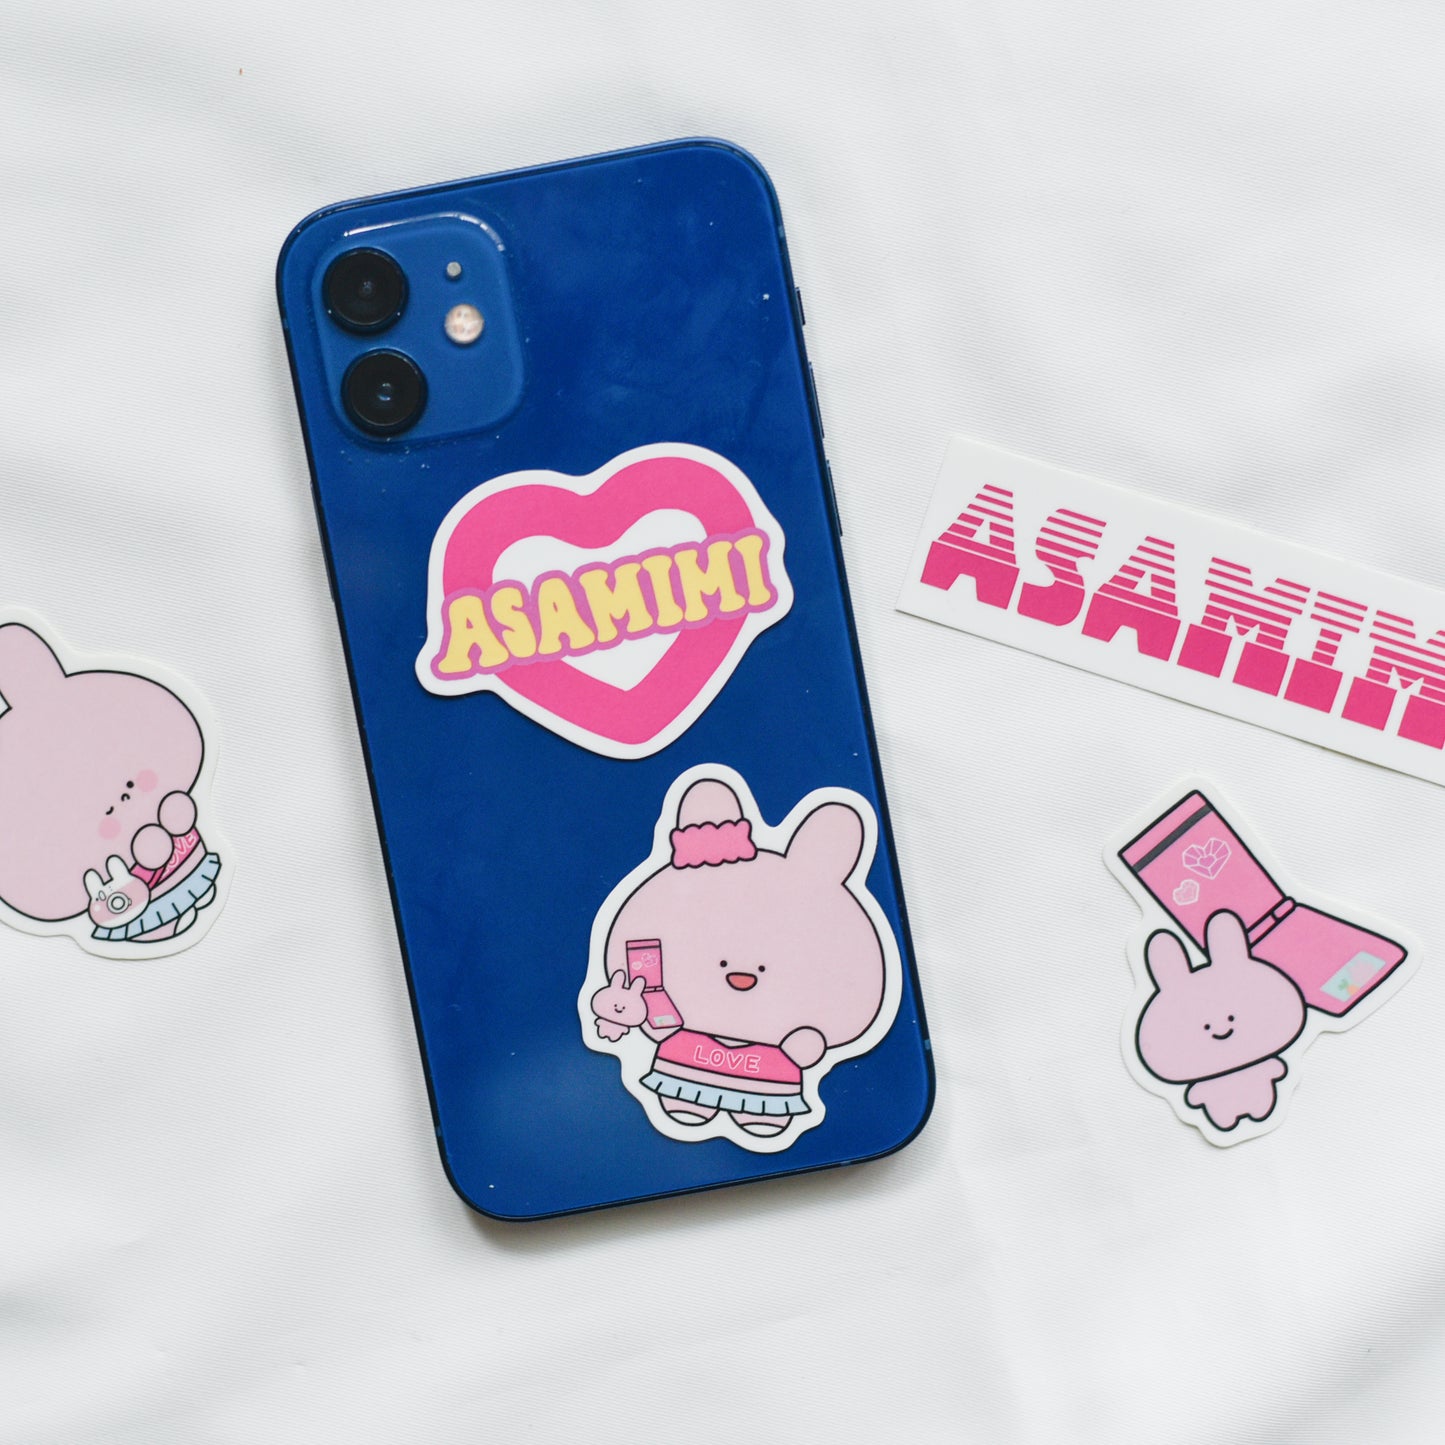 [Asamimi-chan] Gal Mimi sticker pack (5 pieces)